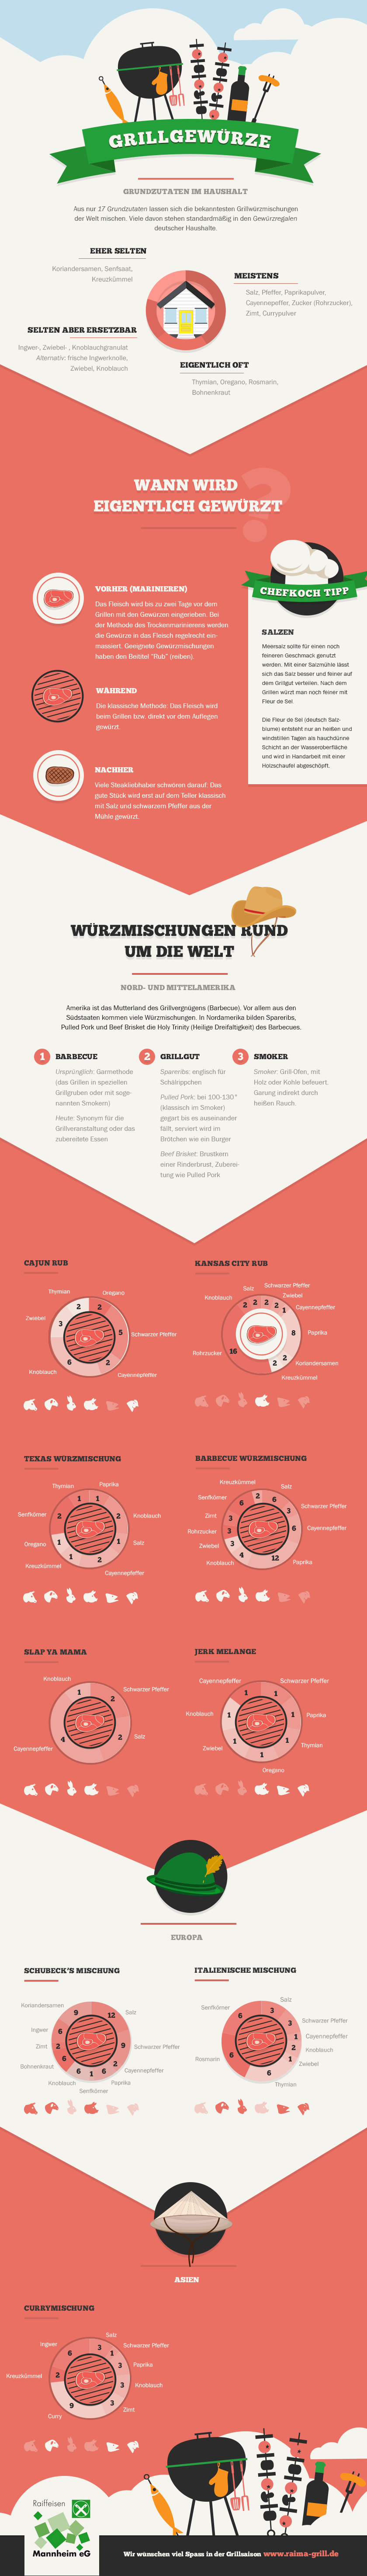 grillgewürze infografik